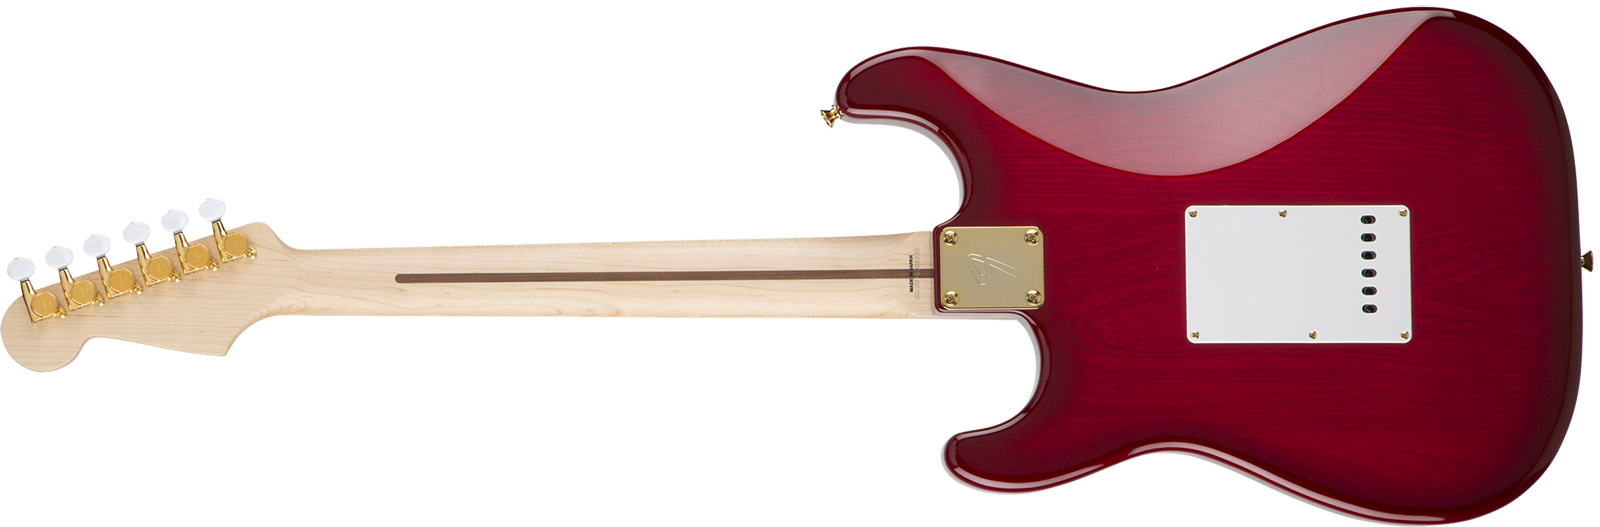 Fender Richie Kotzen Strat Japan Ltd 3s Mn - Transparent Red Burst - E-Gitarre in Str-Form - Variation 4